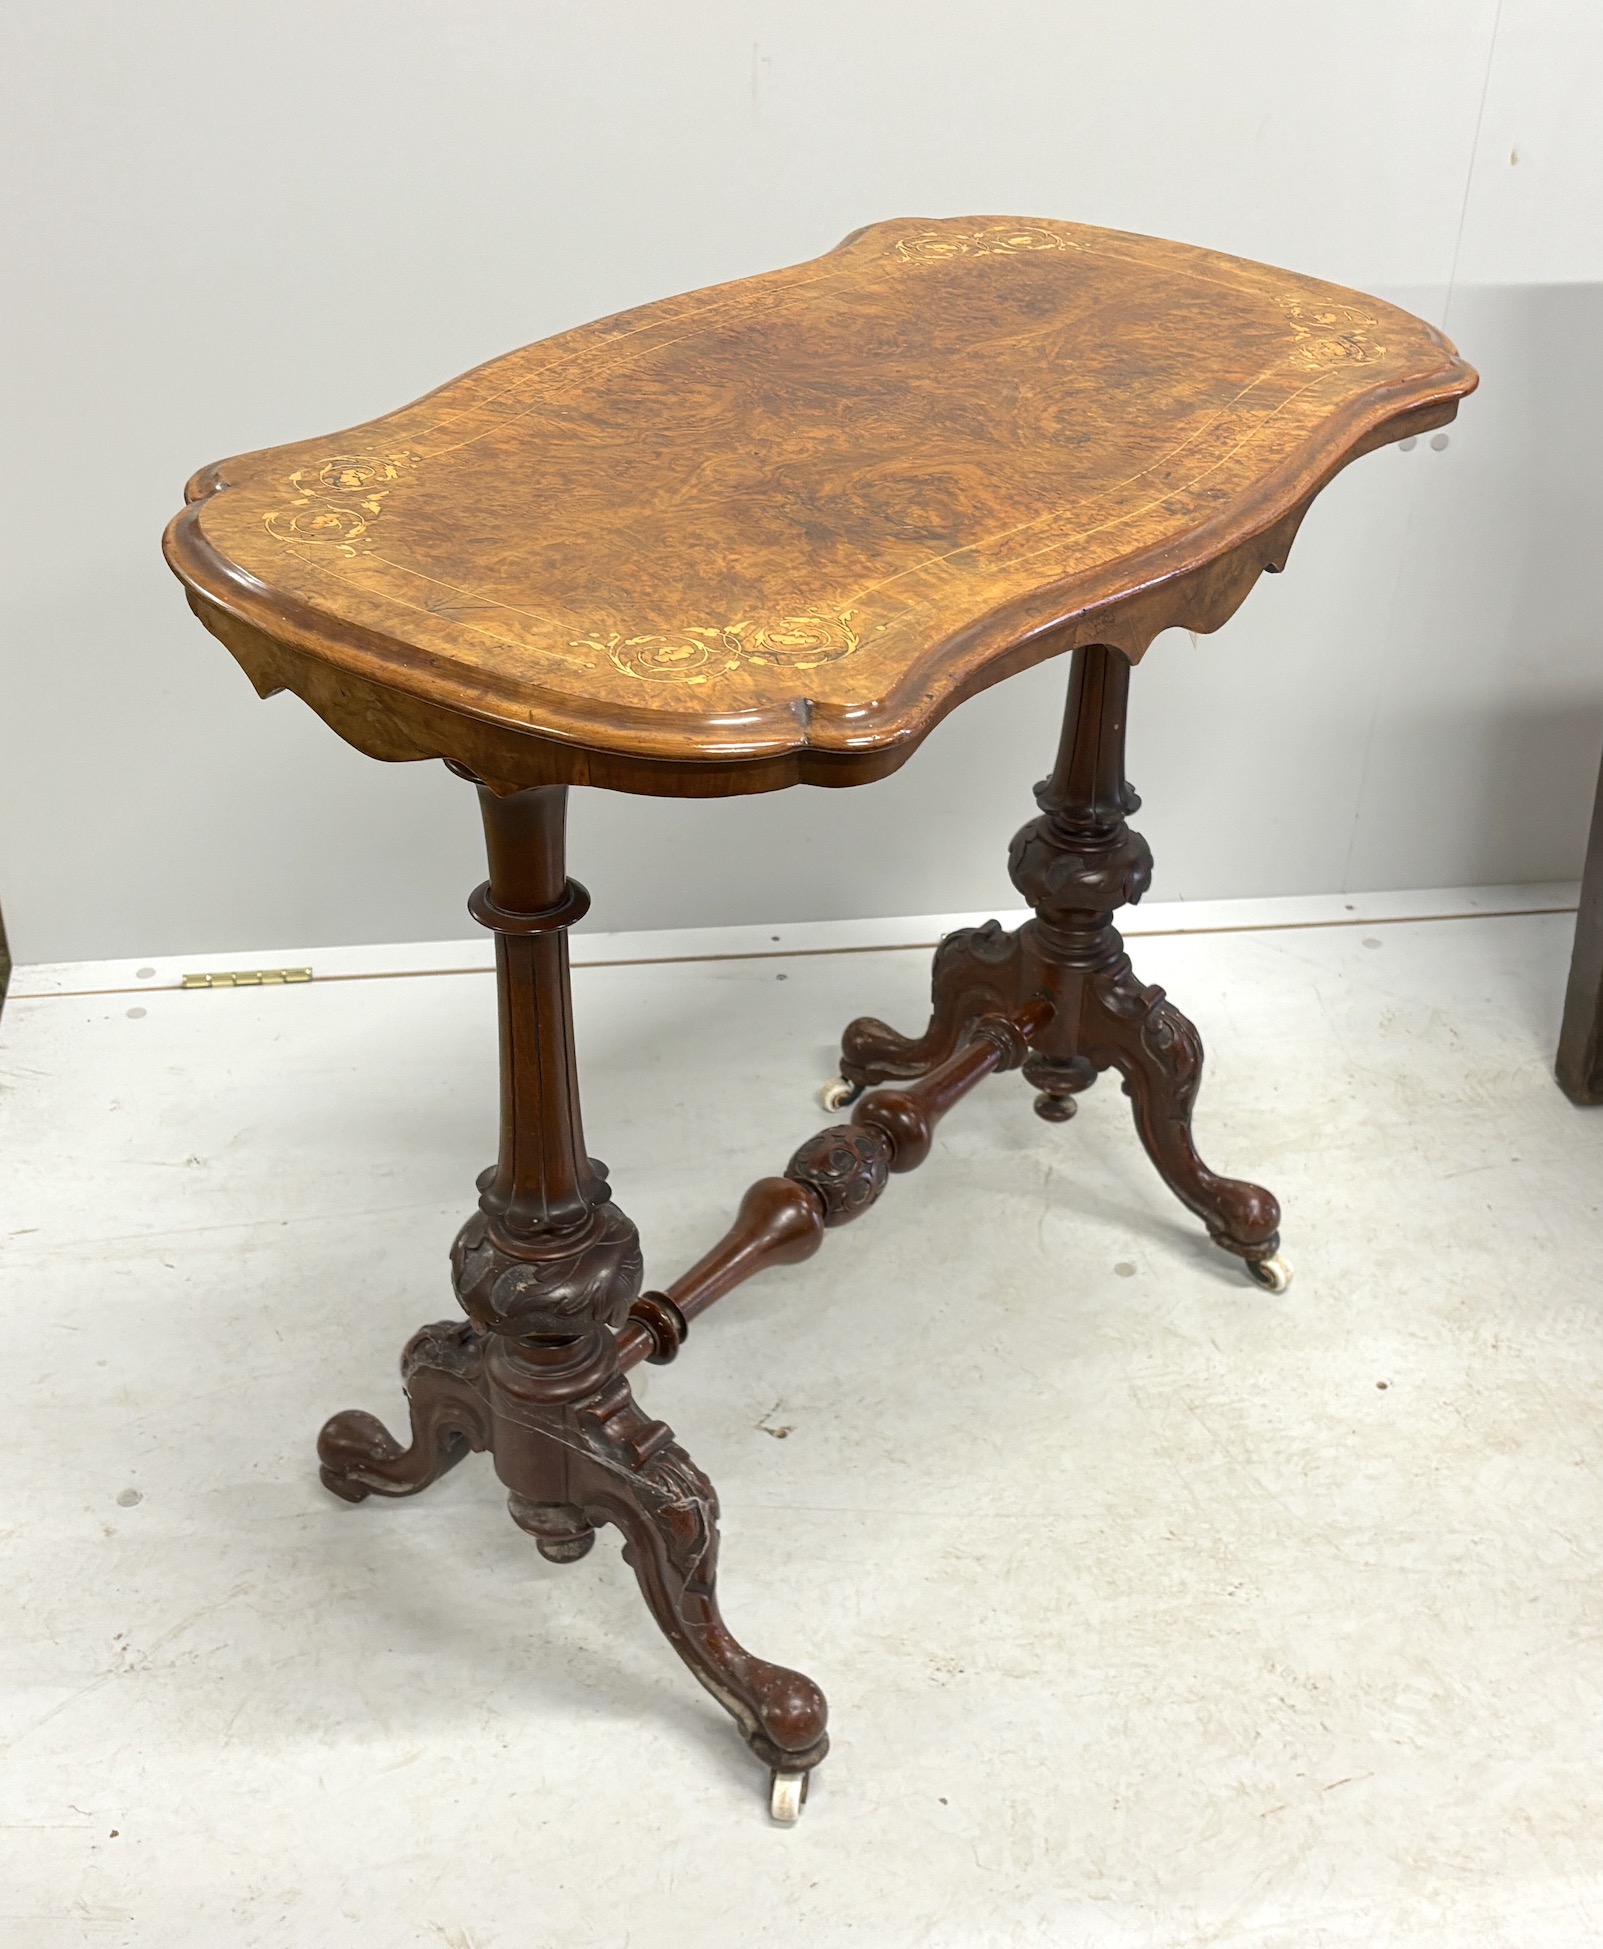 A Victorian inlaid burr walnut rectangular centre table, width 78cm, depth 44cm, height 72cm